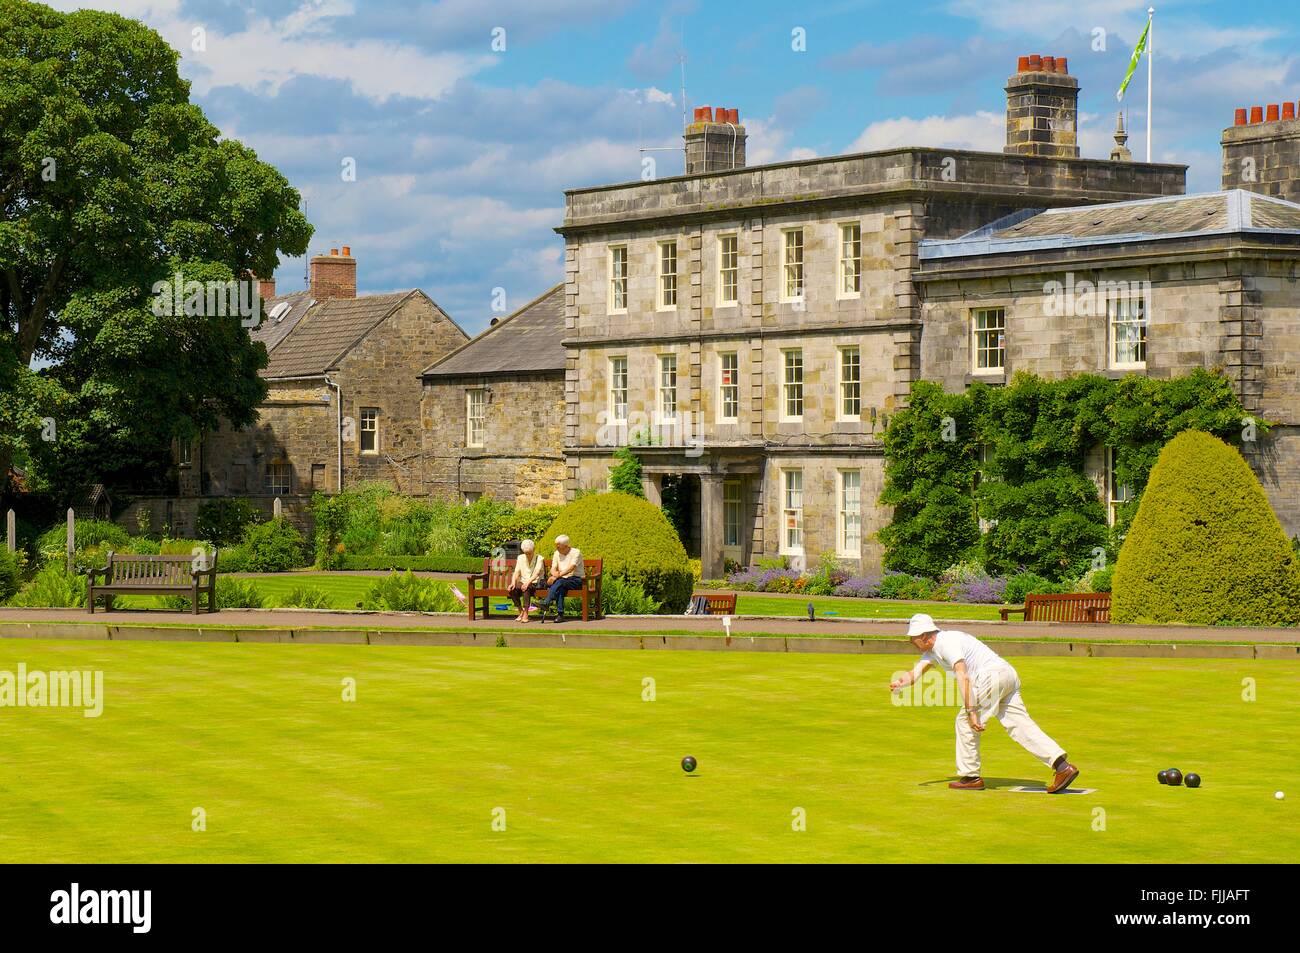 Lawn Bowls. Man rolling his bowl. Hexham House Bowling Club, Hexham, Northumberland, England, United Kingdom, Europe. Stock Photo